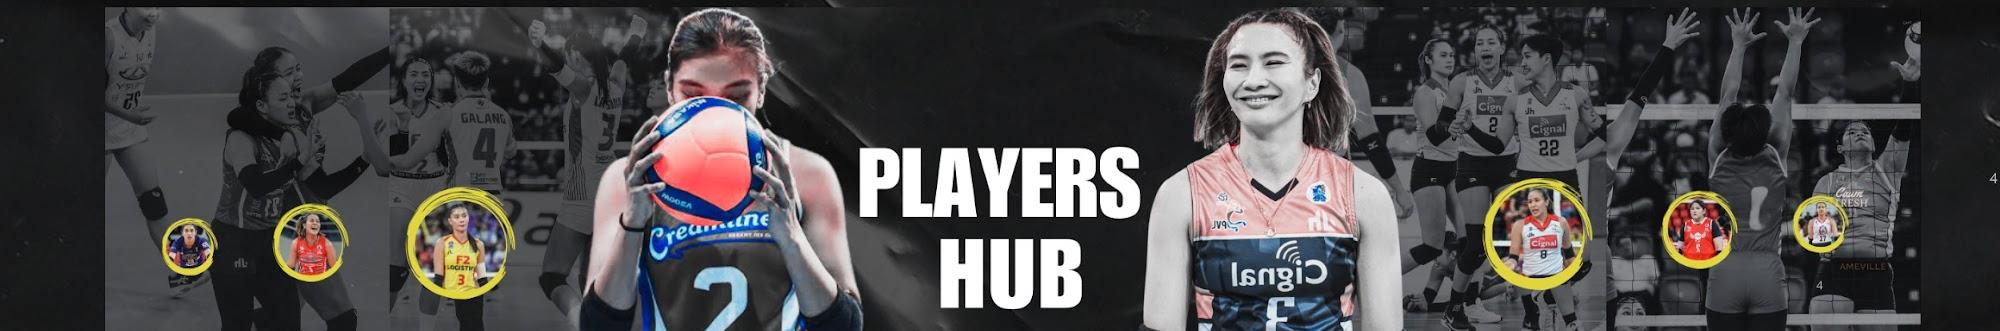 Players Hub